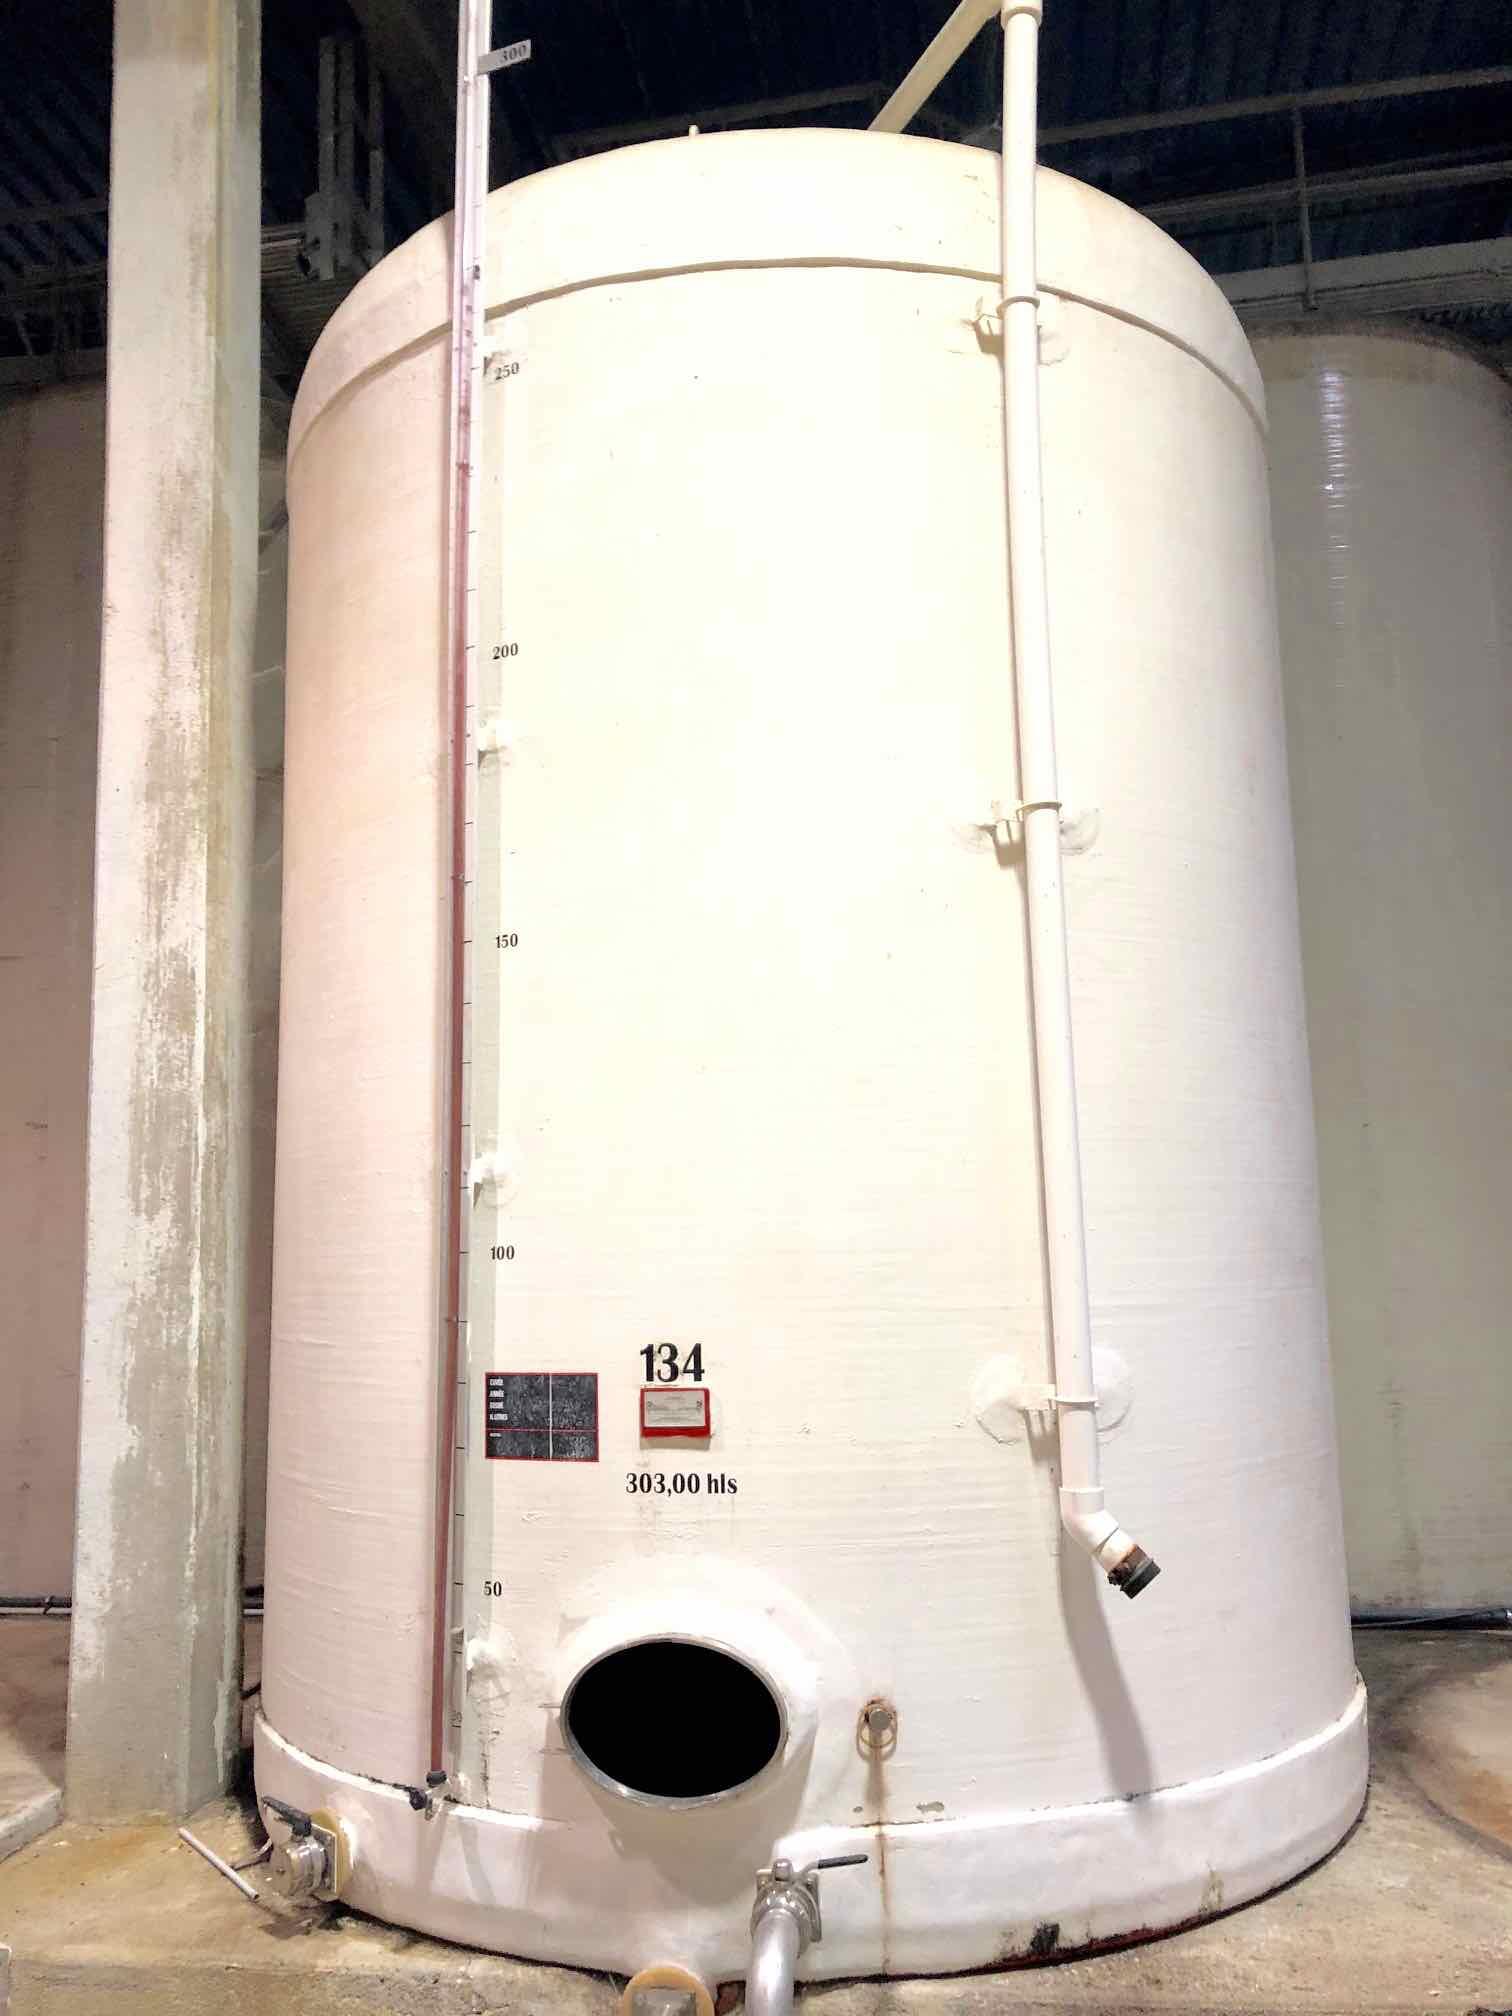 Vertical cylindrical fiber tank - Bombed background on skirt